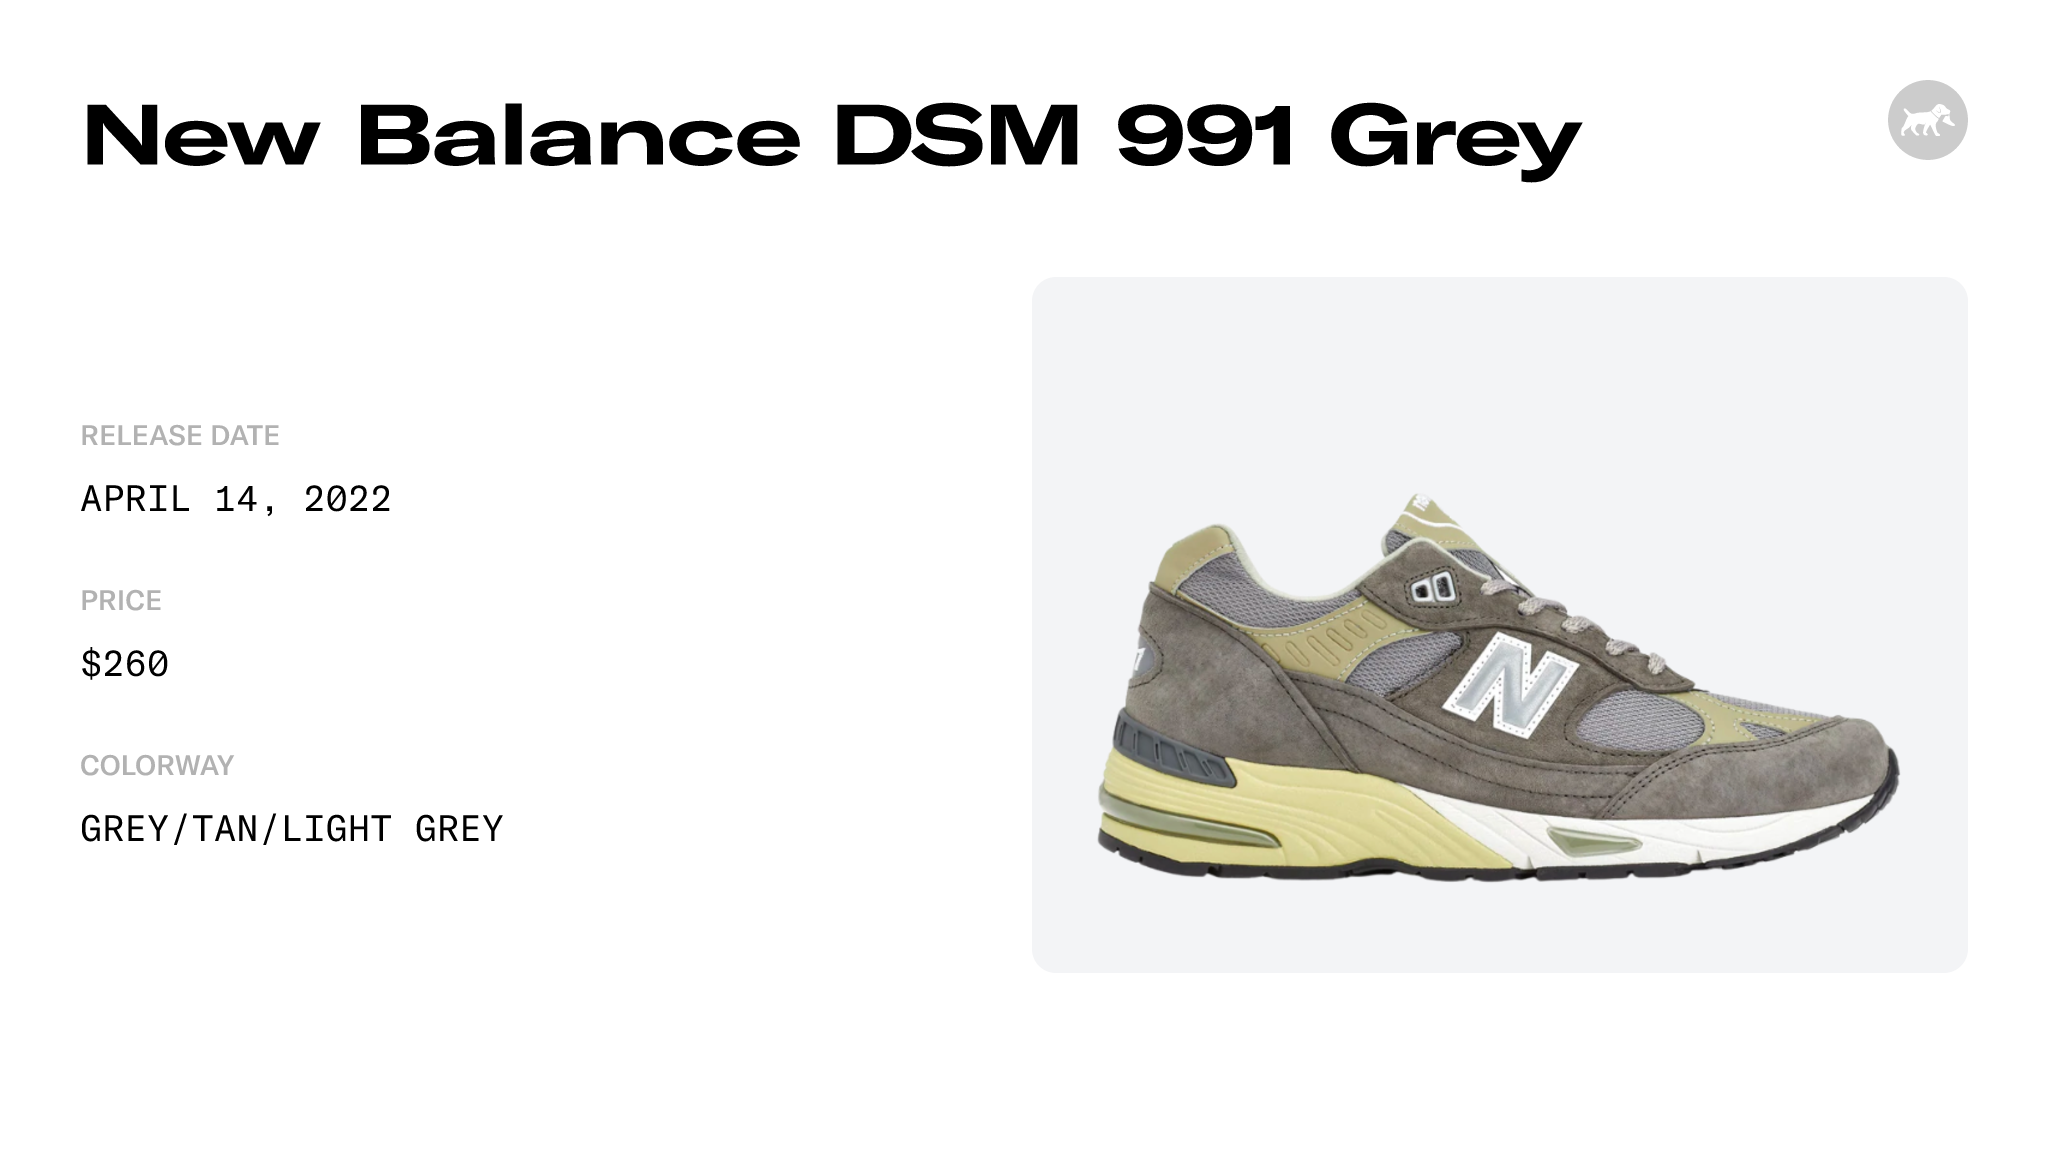 New Balance DSM 991 Grey Raffles and Release Date